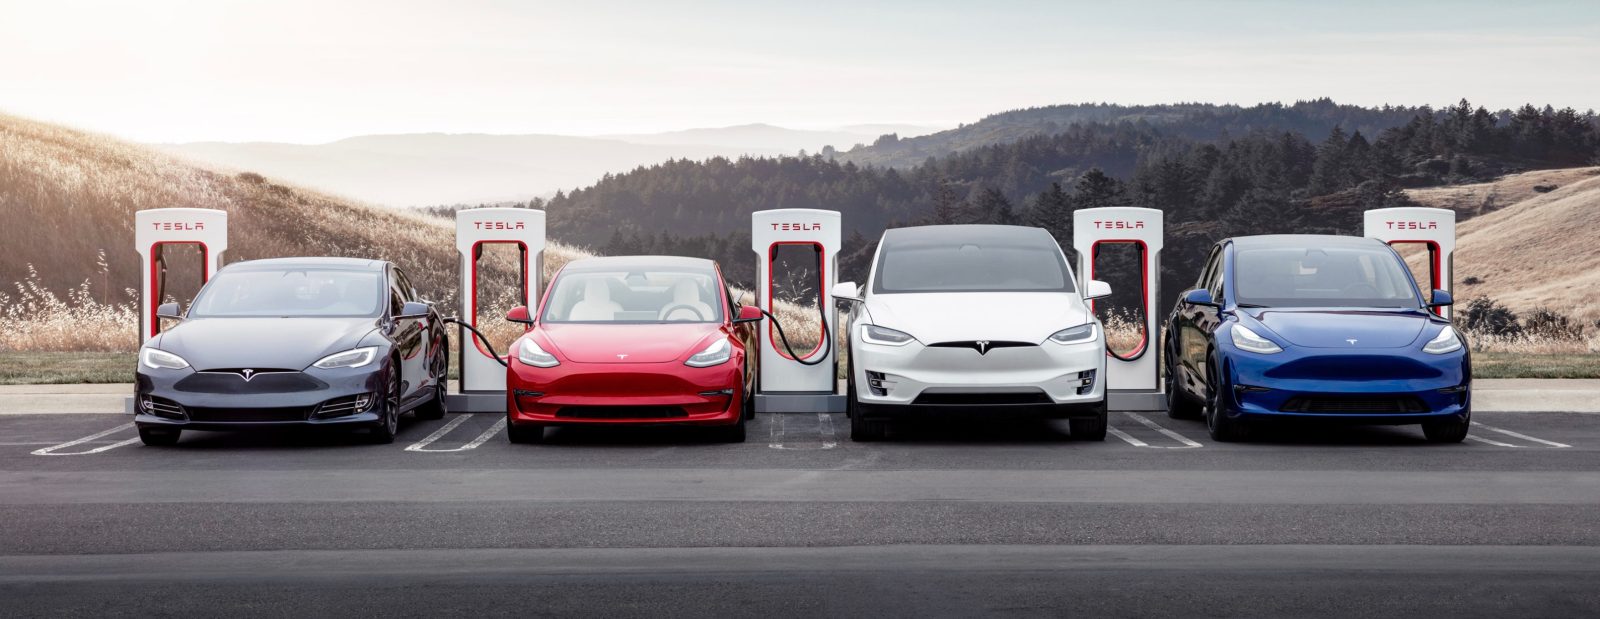 Tesla Supercharger electric cars